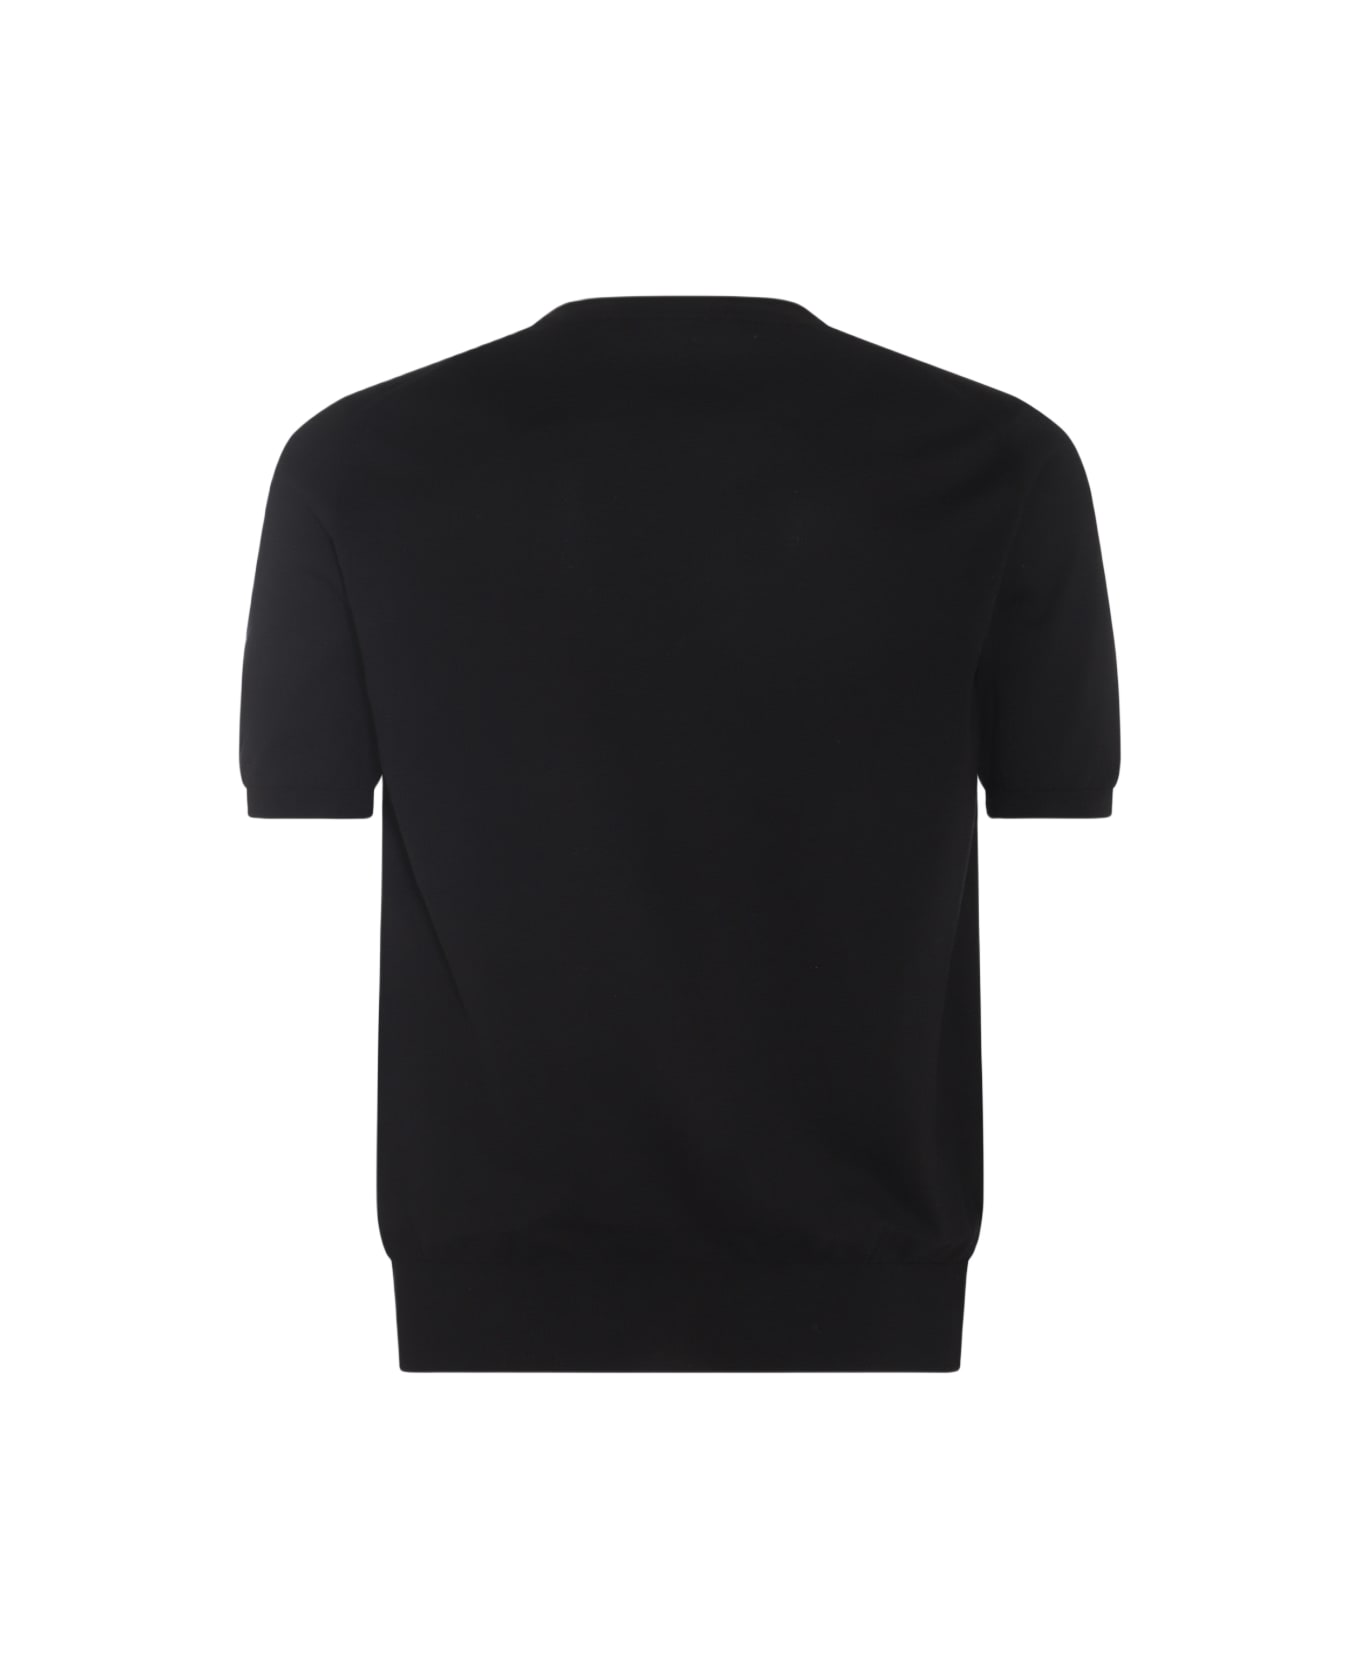 Cruciani Black Cotton T-shirt - Black